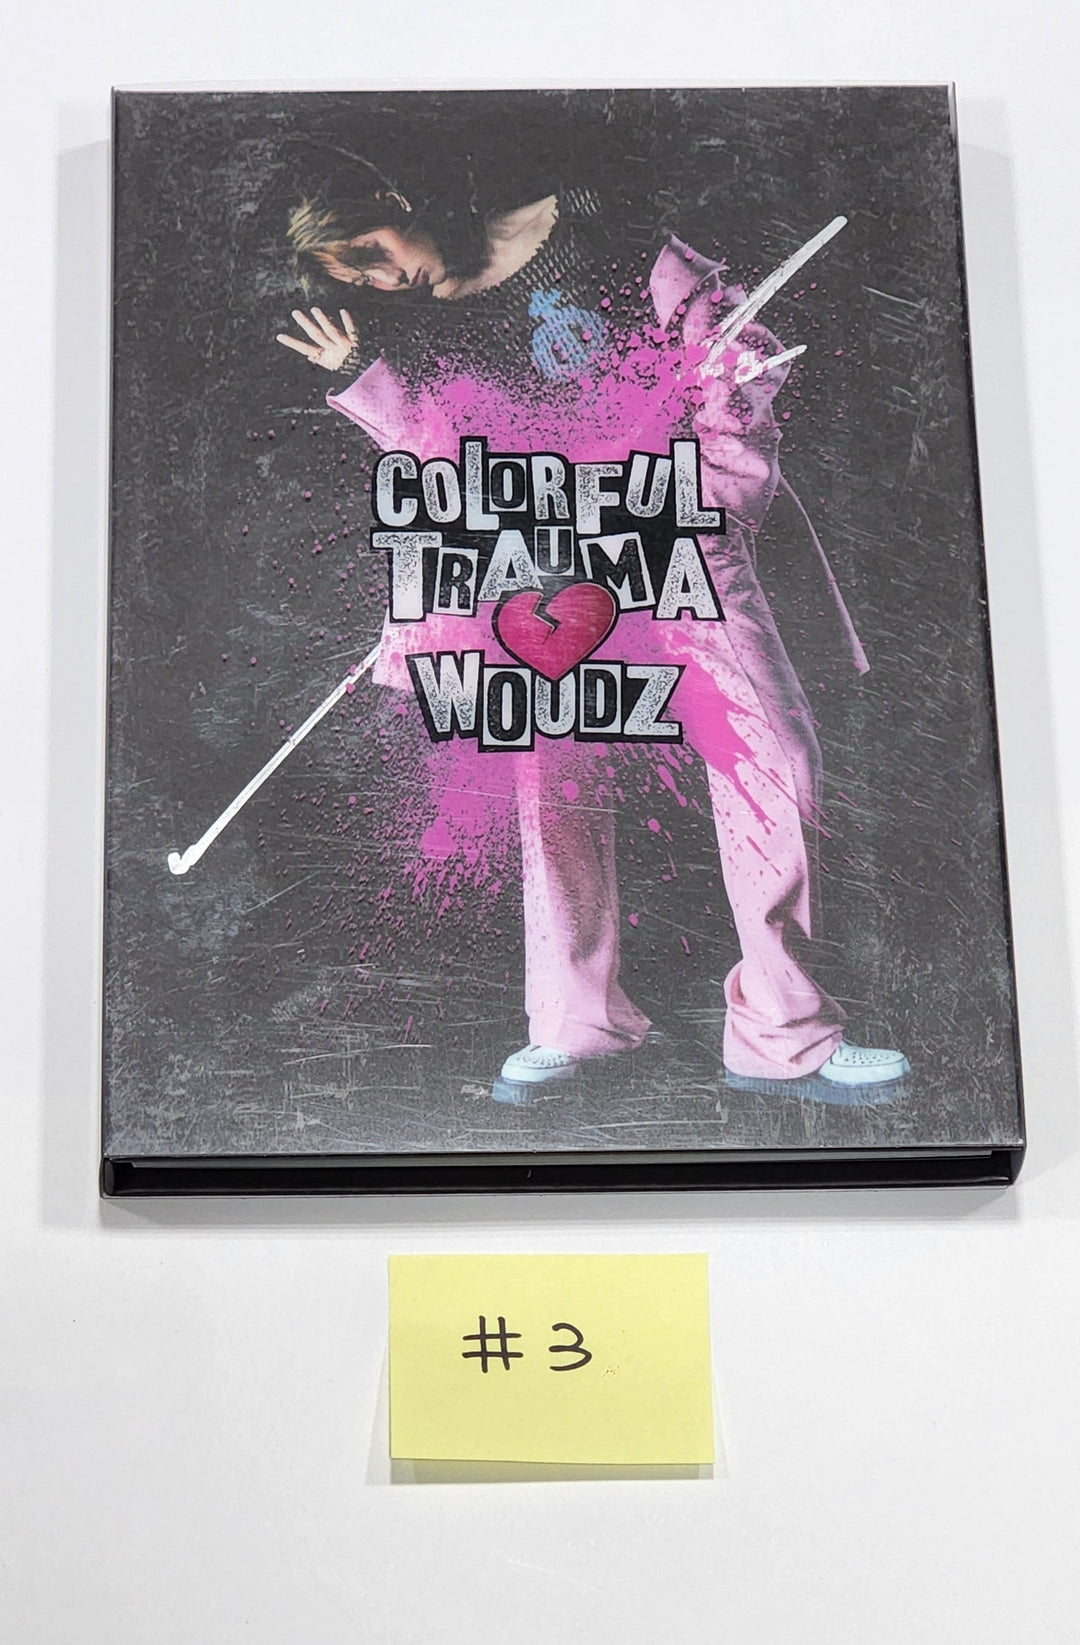 WOODZ "Colorful Trauma" - Hand Autographed(Signed) Promo Album